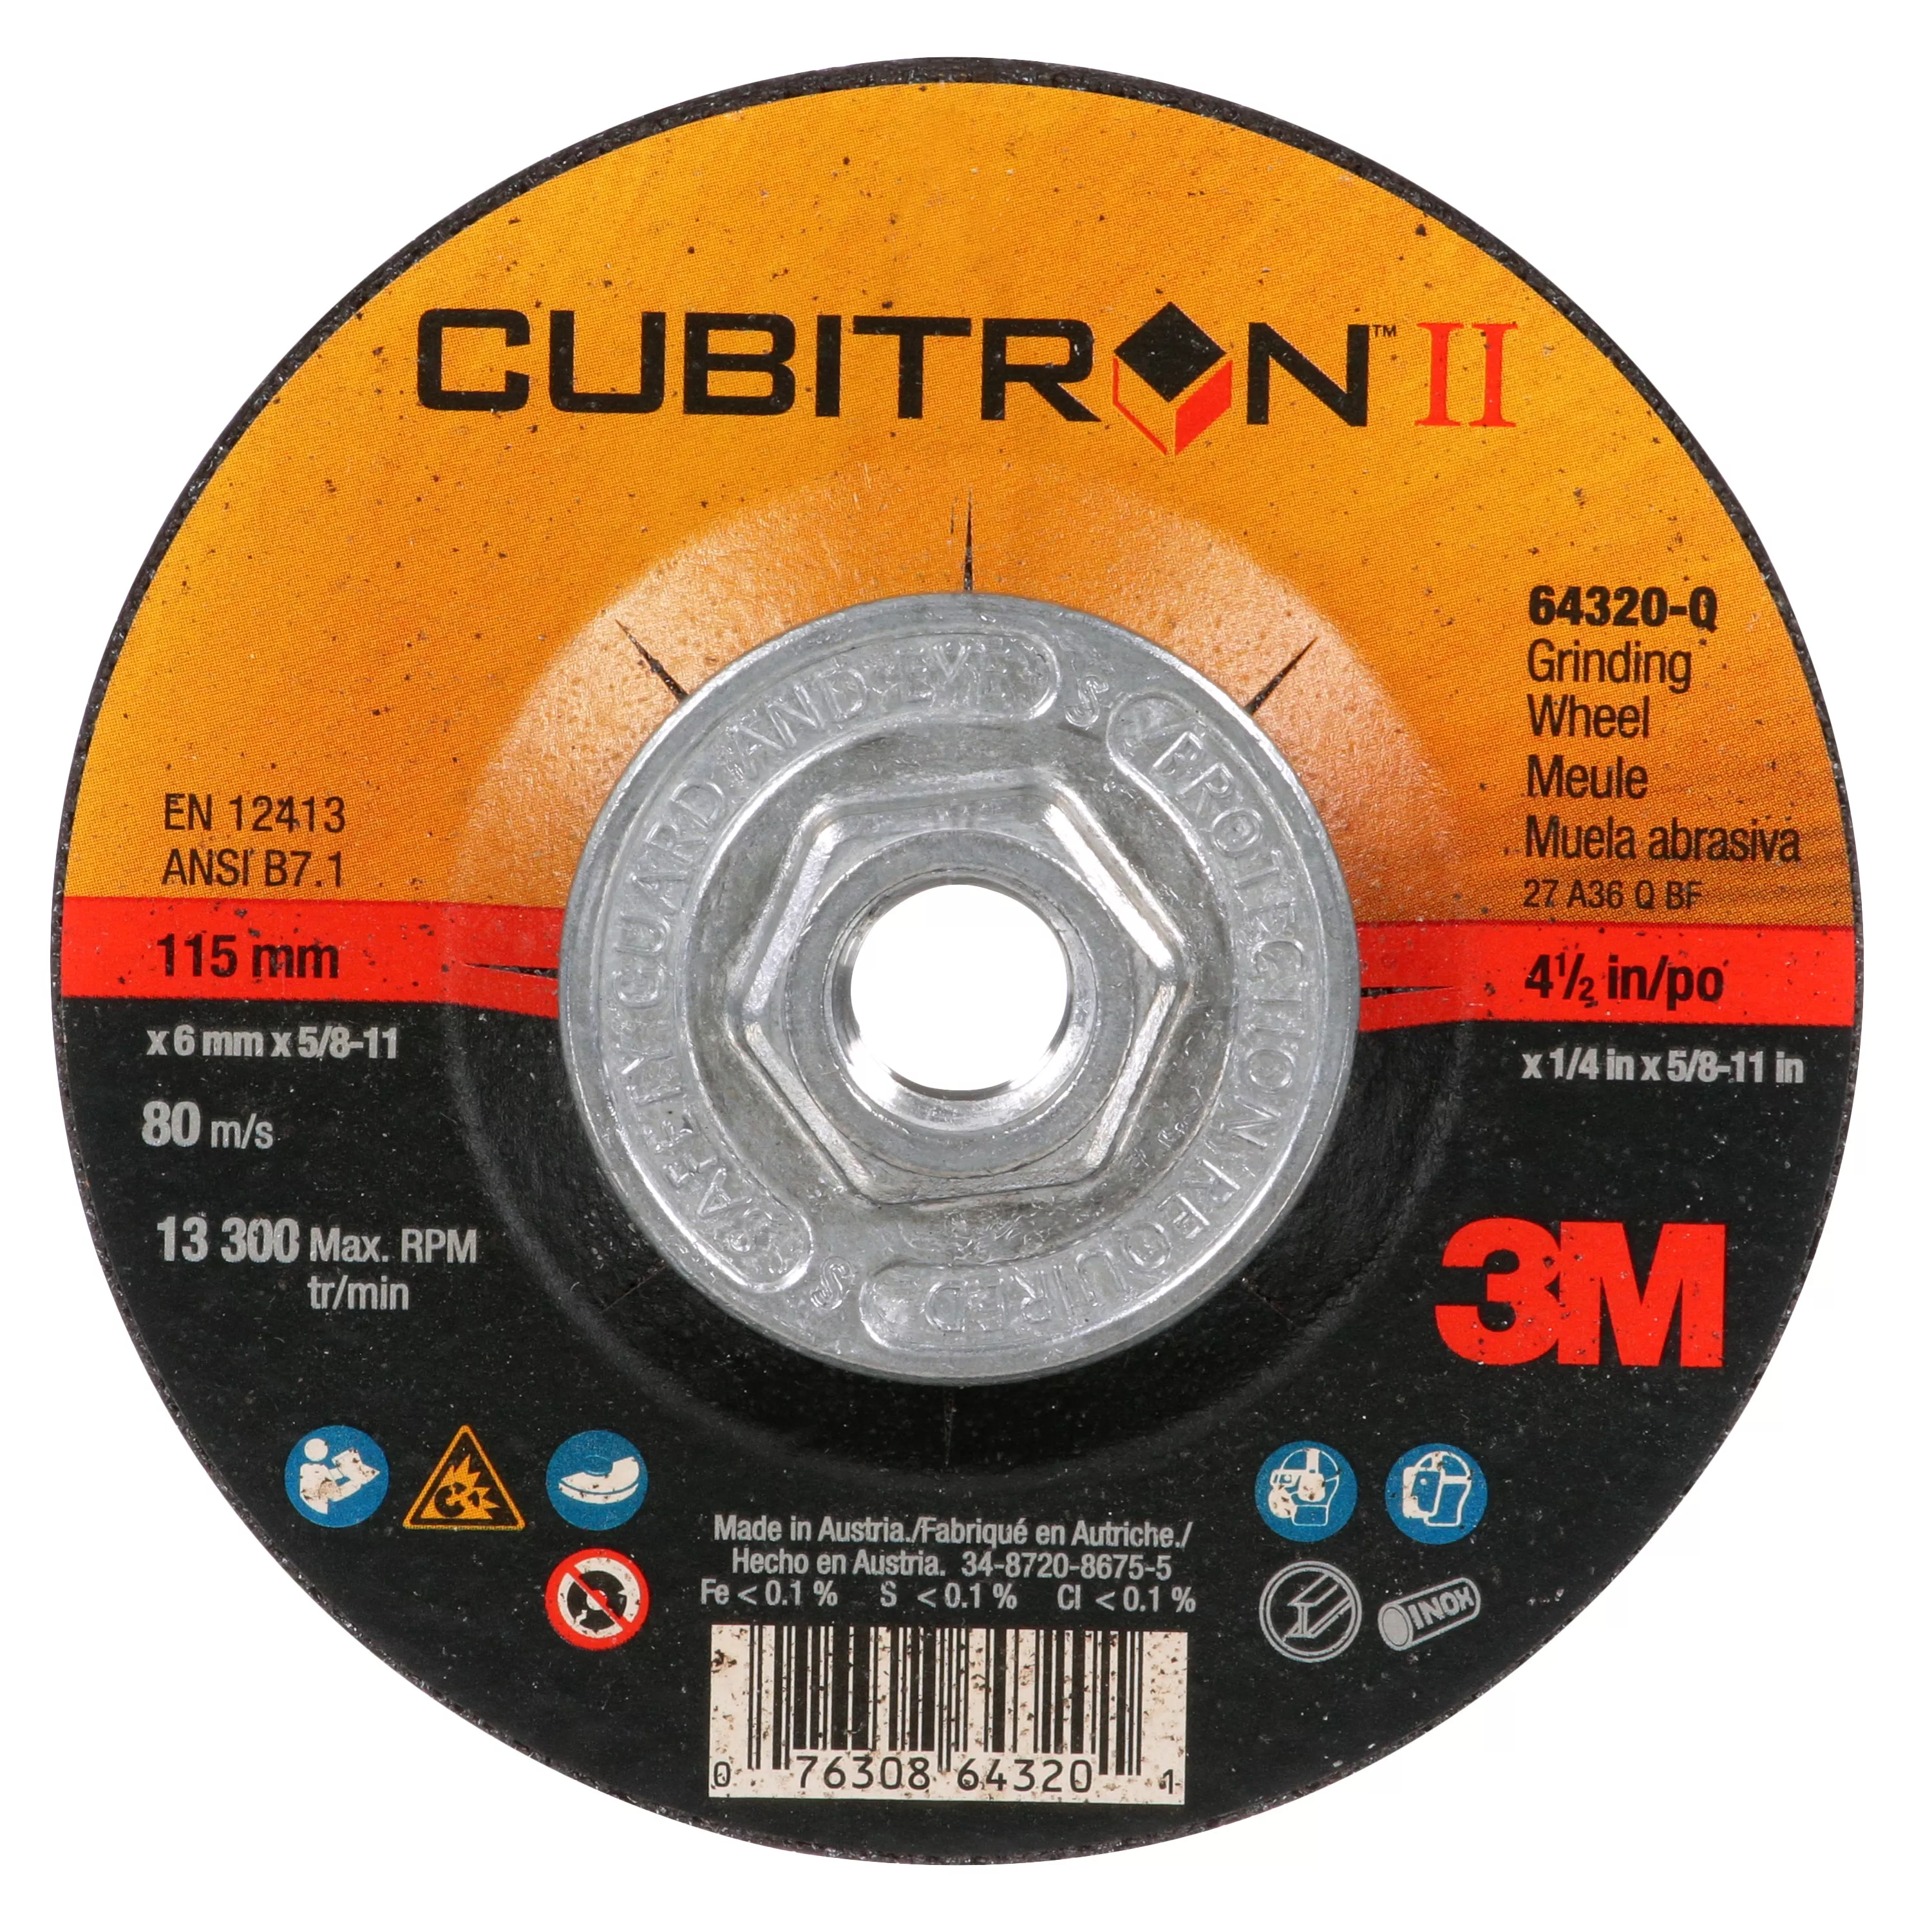 3M™ Cubitron™ II Depressed Center Grinding Wheel, 64320, Quick Change,
T27, 4-1/2 in x 1/4 in x 5/8